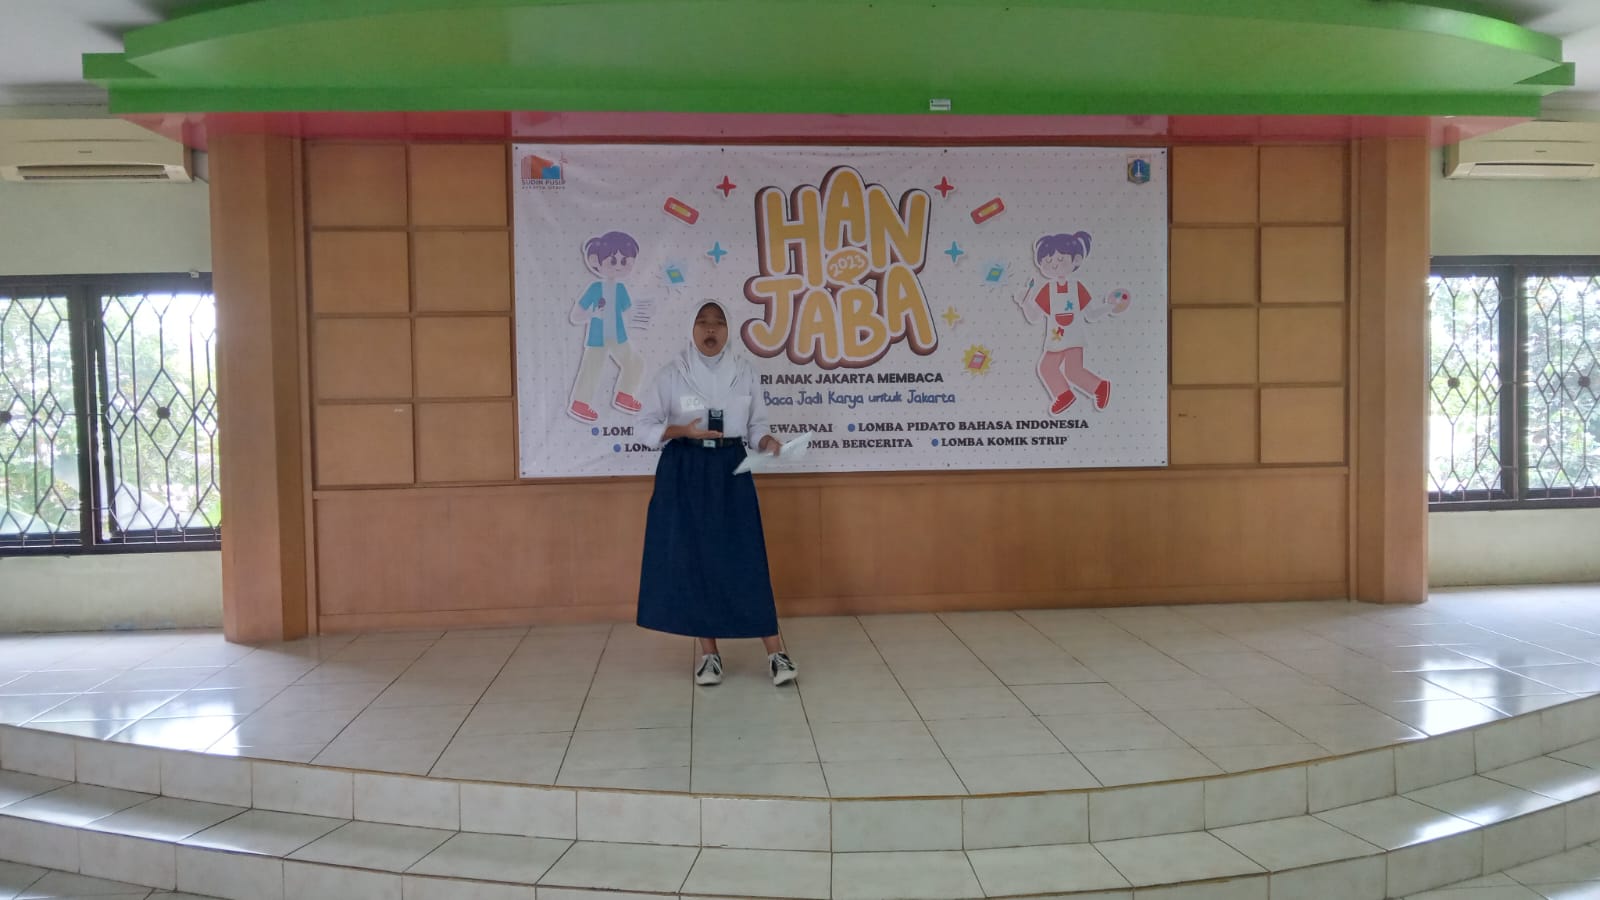 Lomba Pidato Bahasa Indonesia Hari Anak Jakarta Membaca (HANJABA) Jakarta Utara